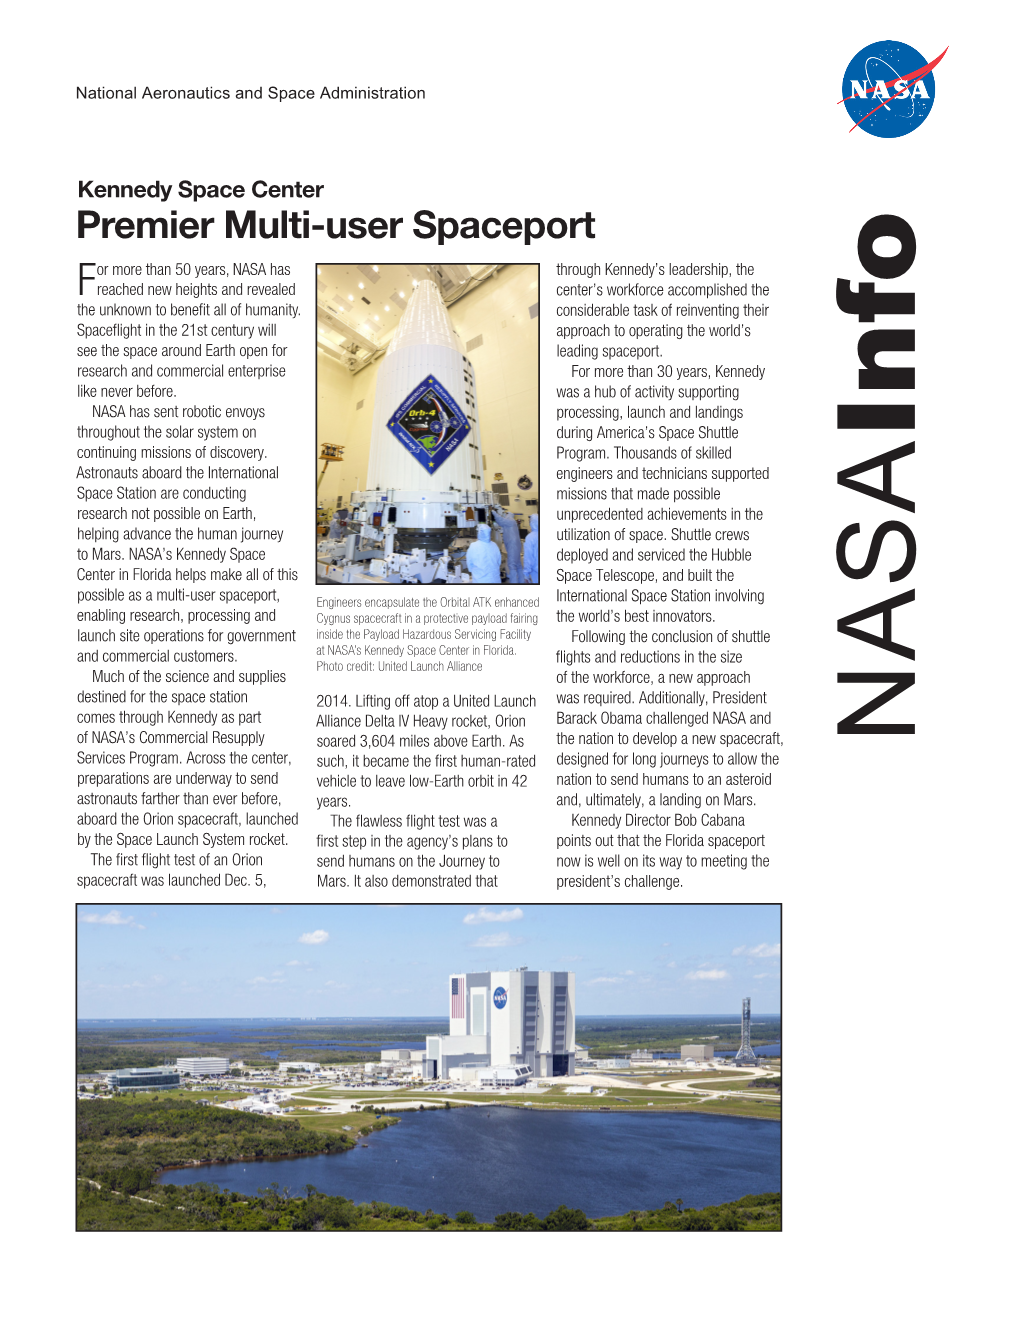 Premier Multi-User Spaceport